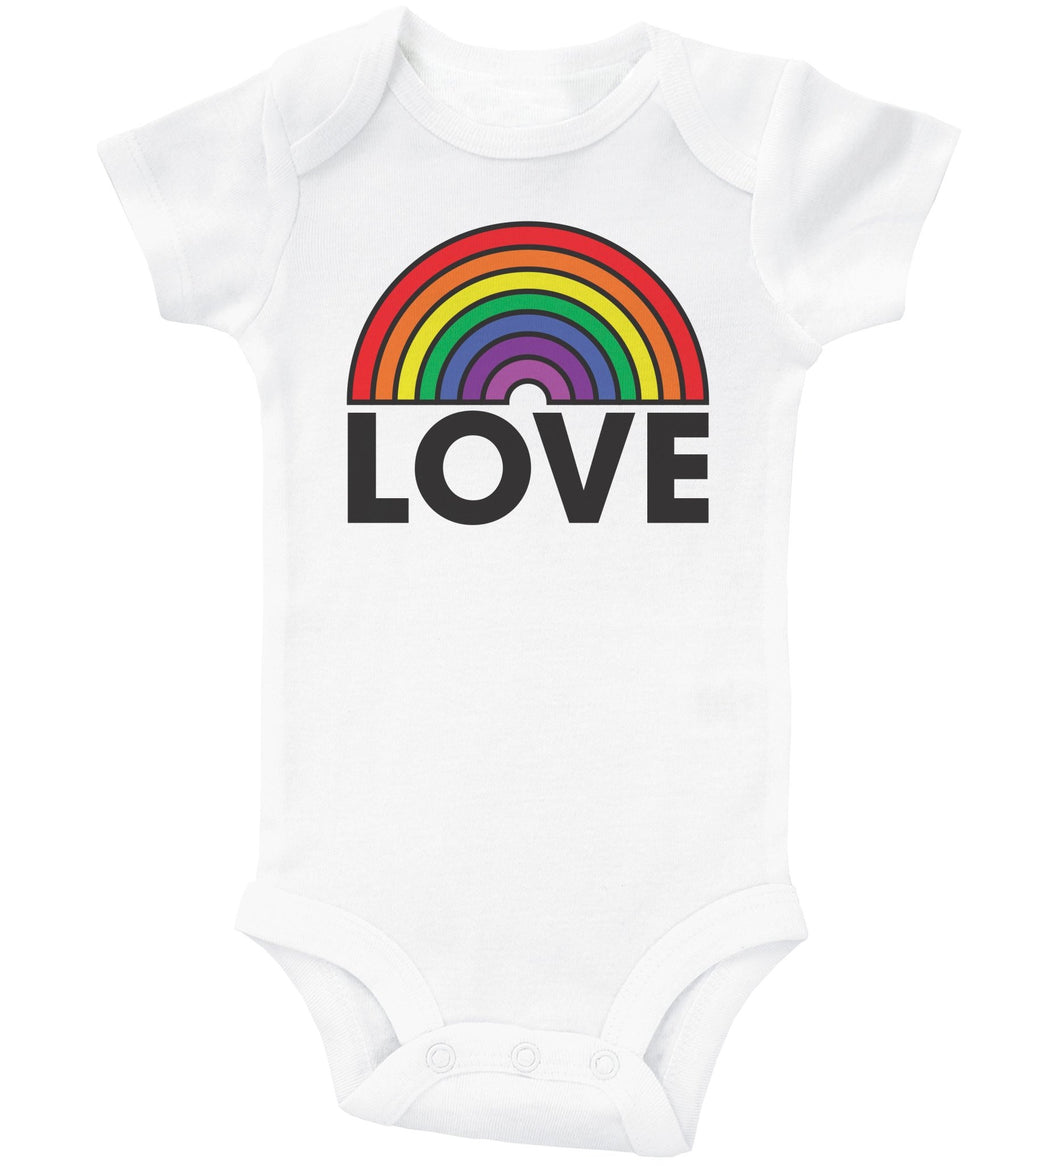 LOVE / Rainbow Love Baby Onesie - Baffle